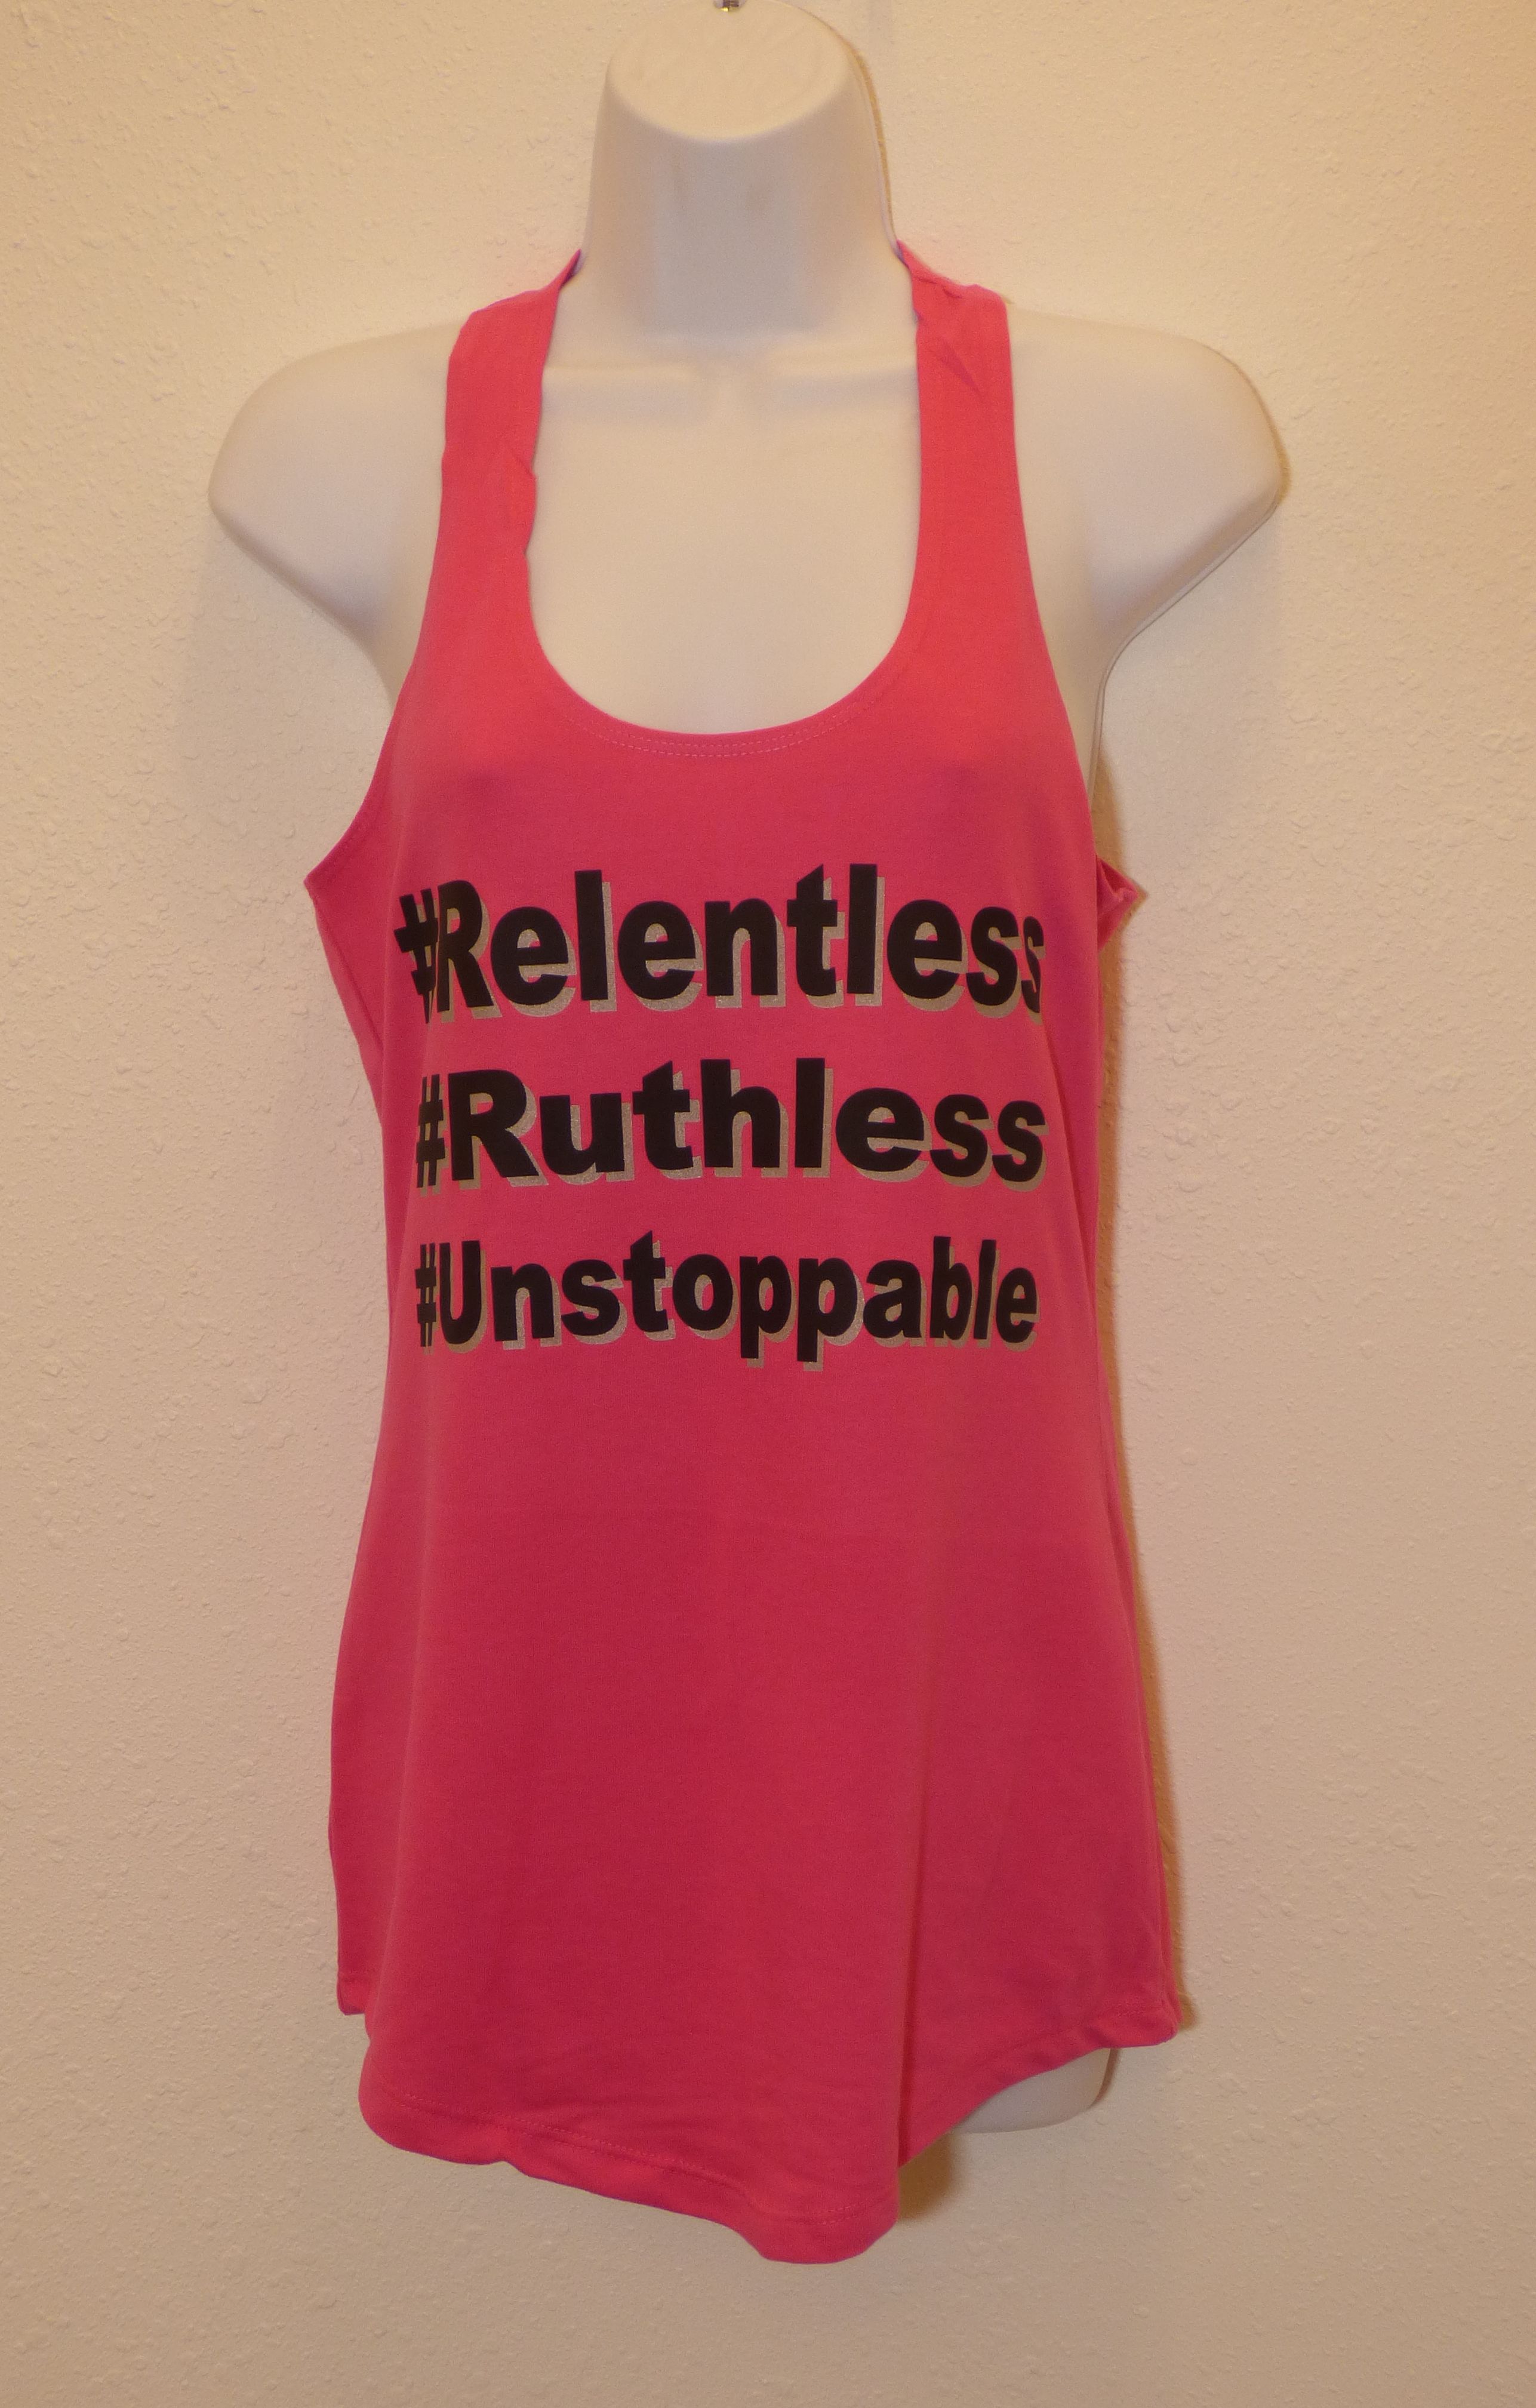 Women's 'Ruthless Relentless Unstoppable' flowy tank